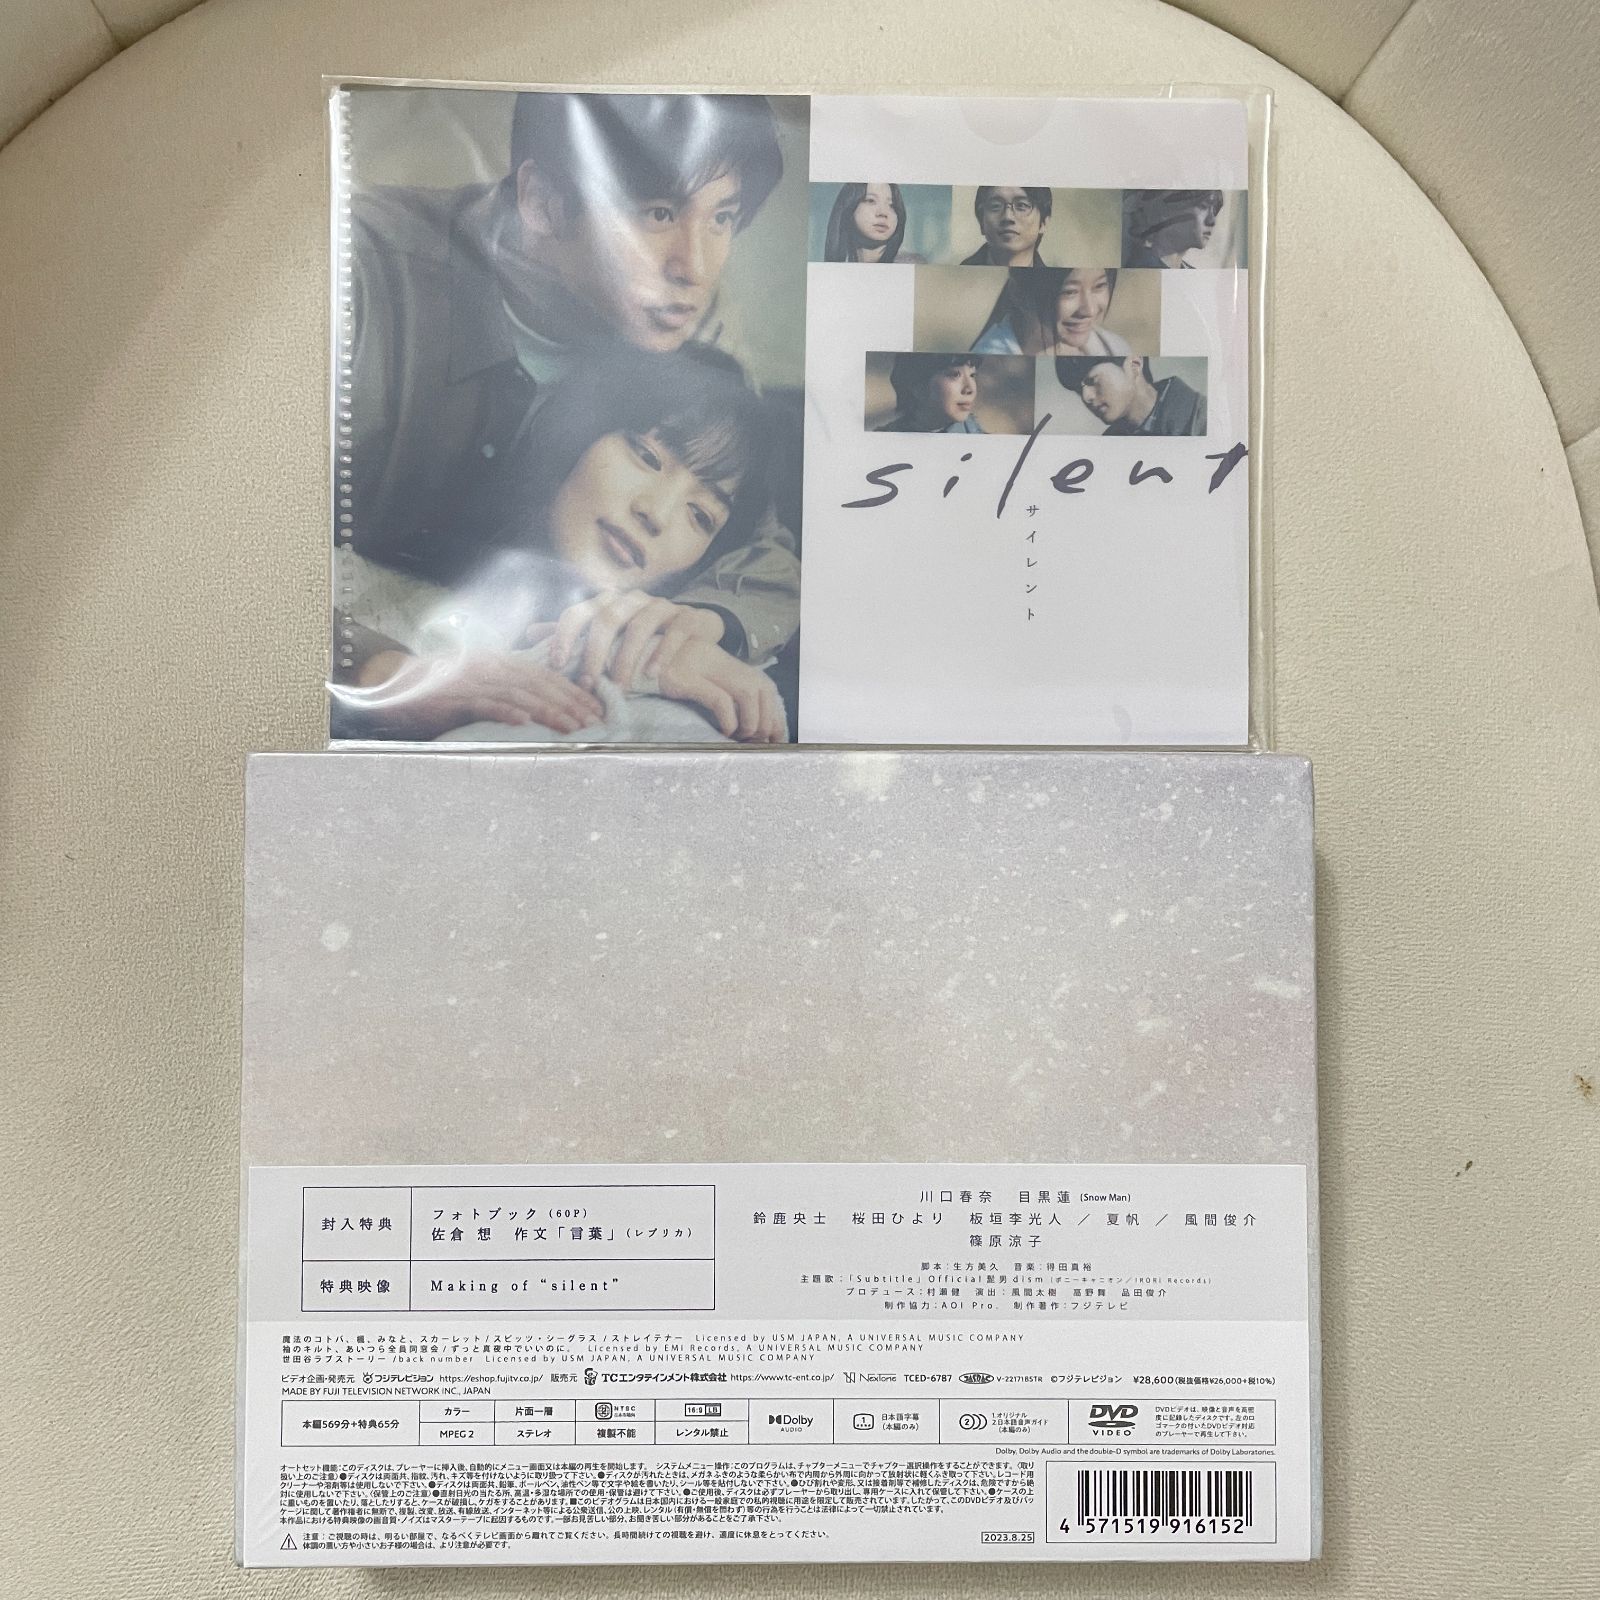 silent-ディレクターズカット版- DVD-BOX〈7枚組〉 - メルカリ